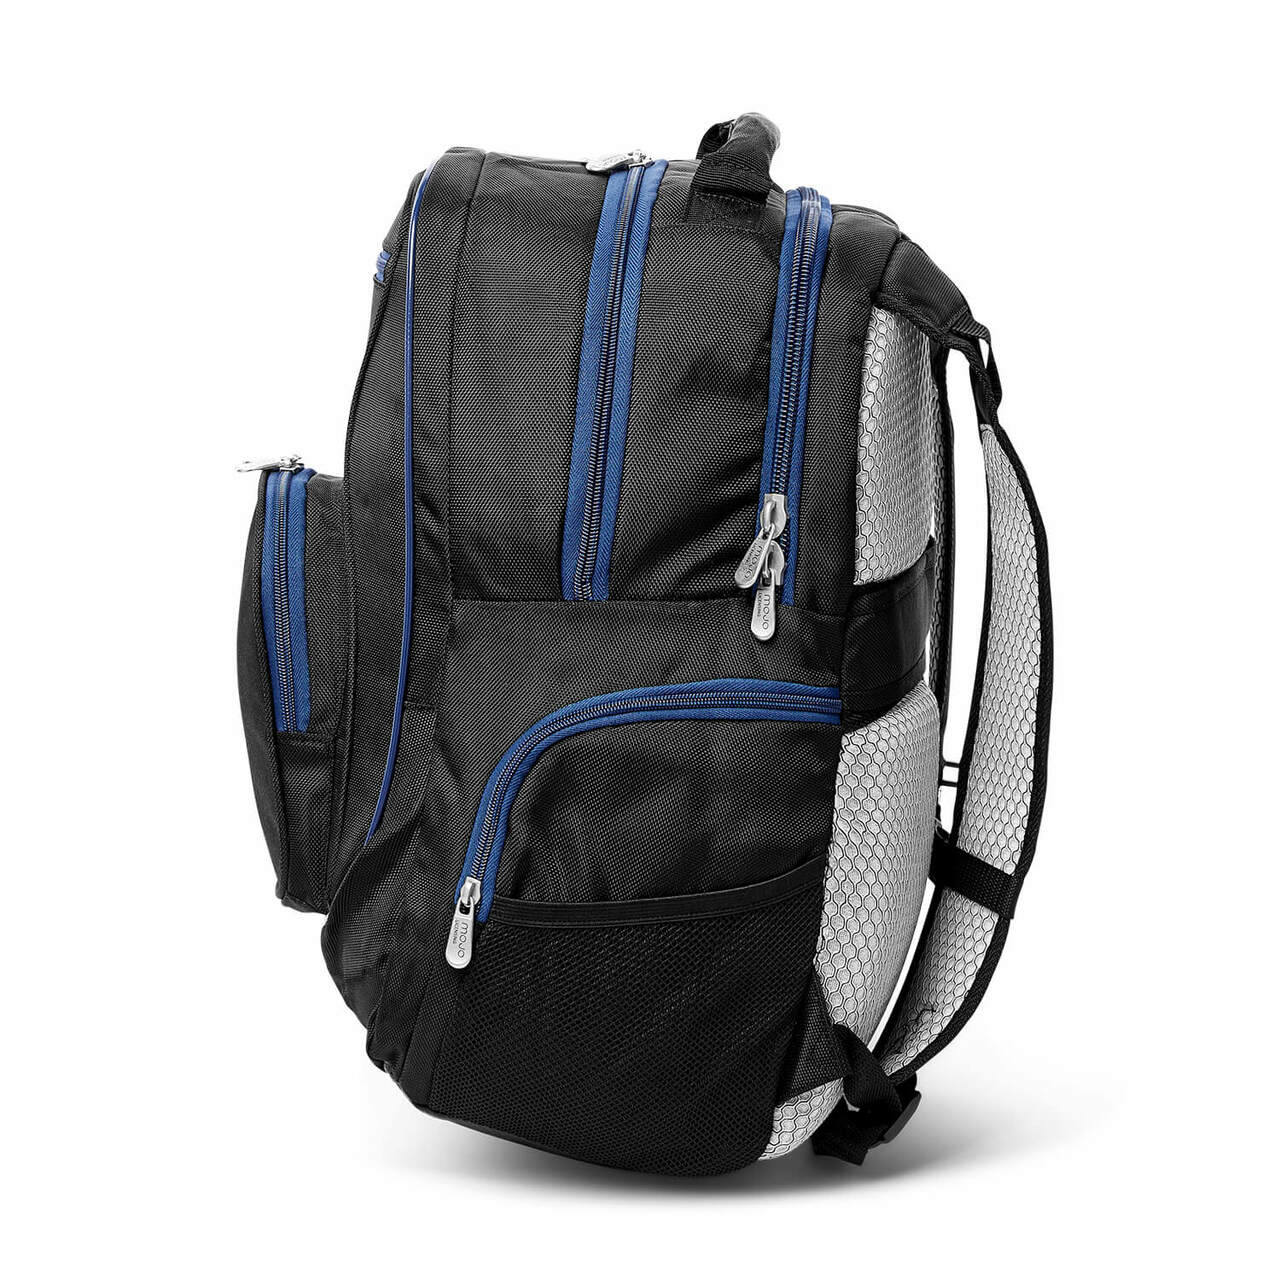 Grizzlies Backpack | Memphis Grizzlies Laptop Backpack